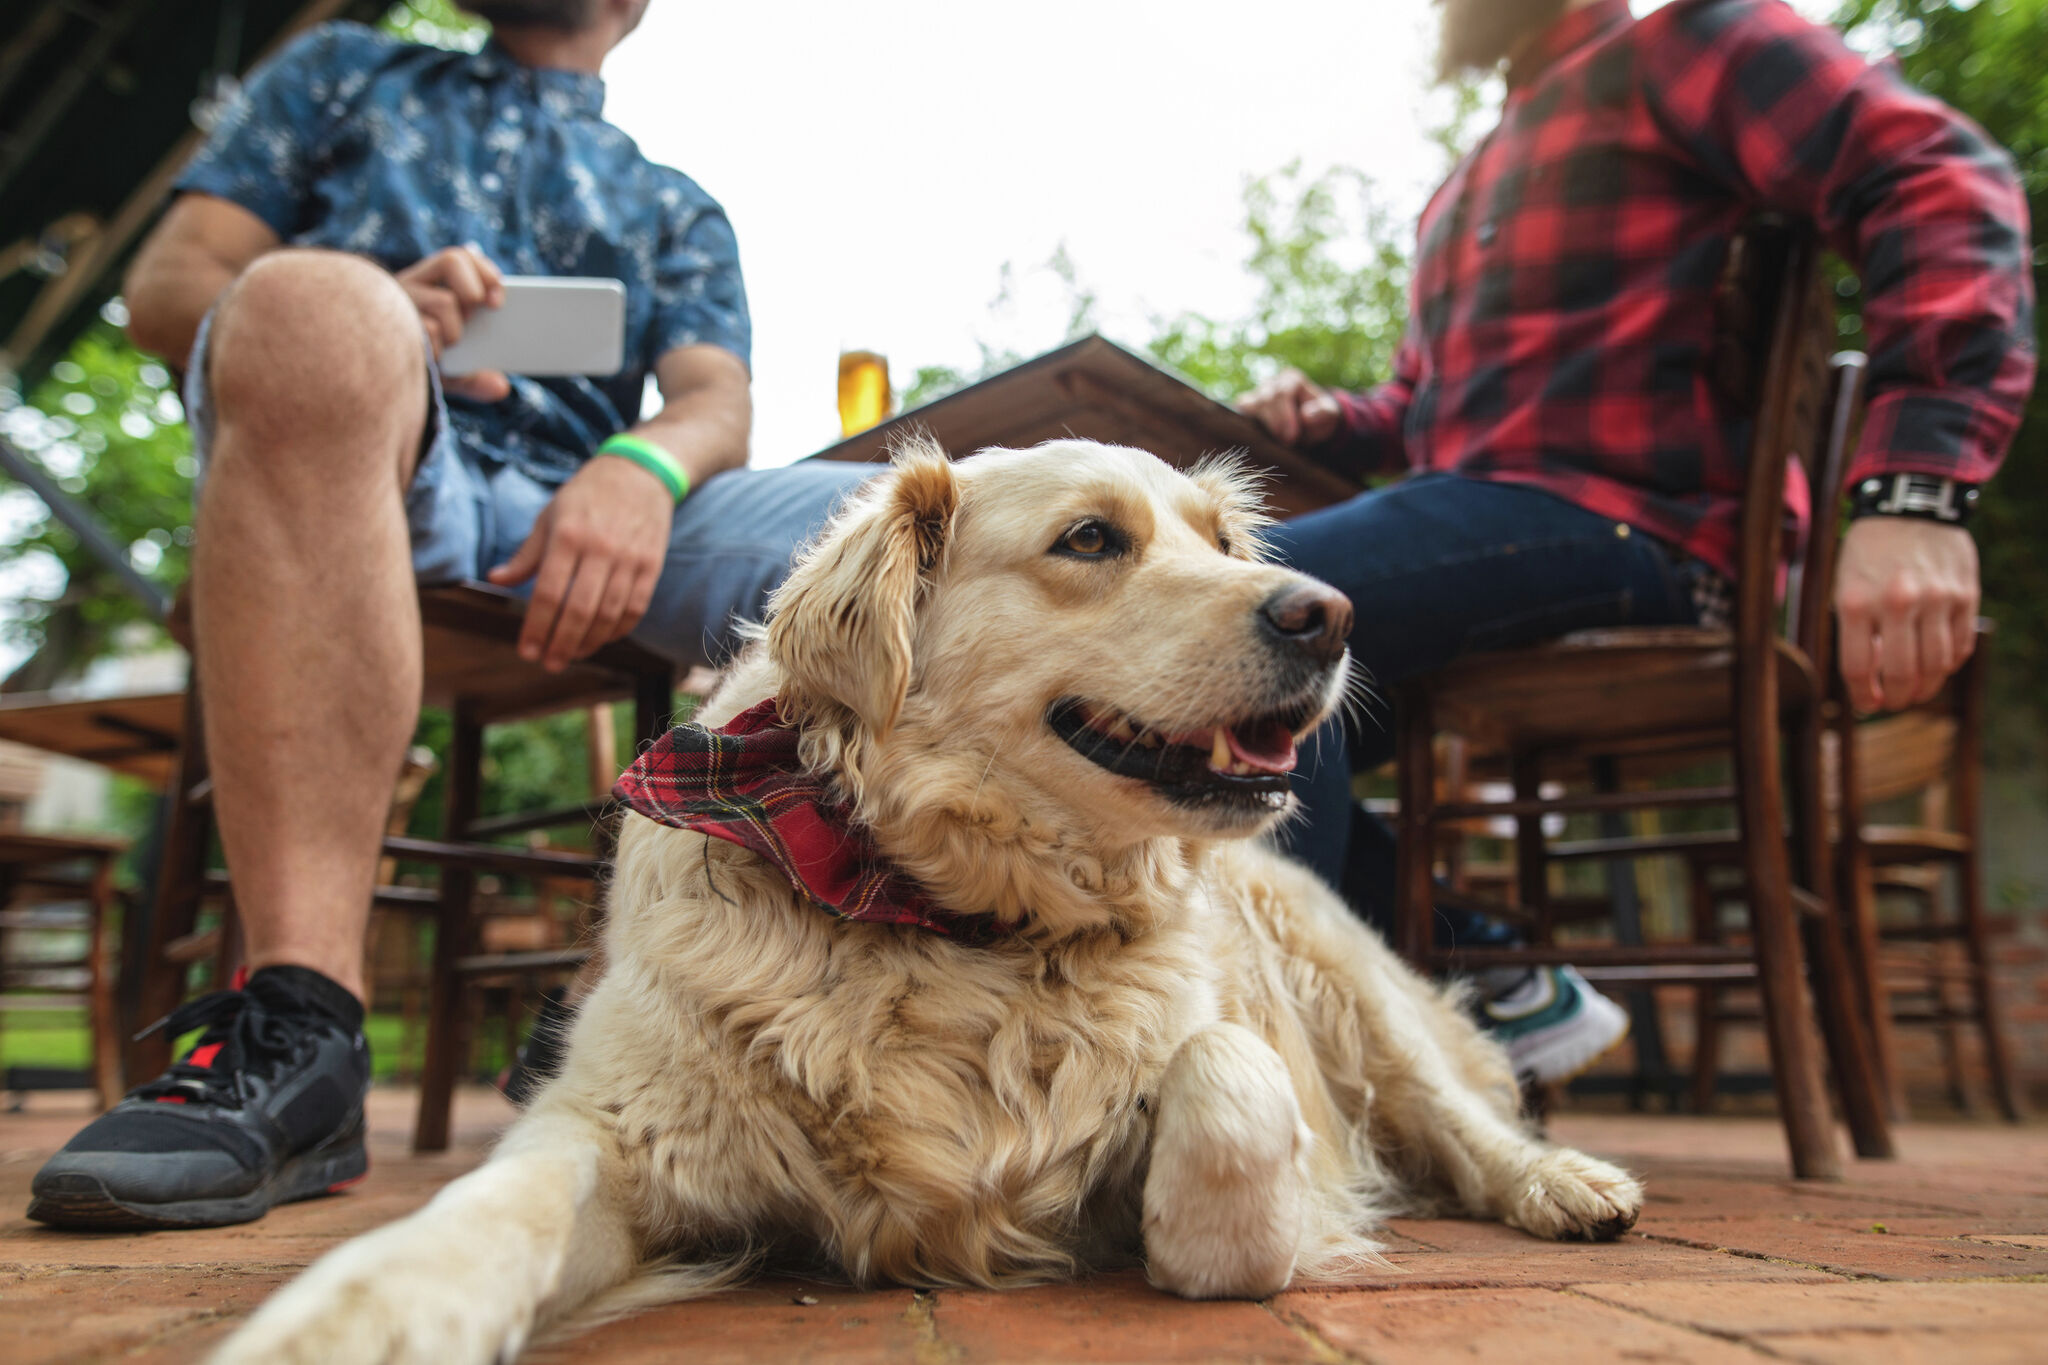 Austin’s Arboretum to host 4th Annual Pups & Pints in Texas